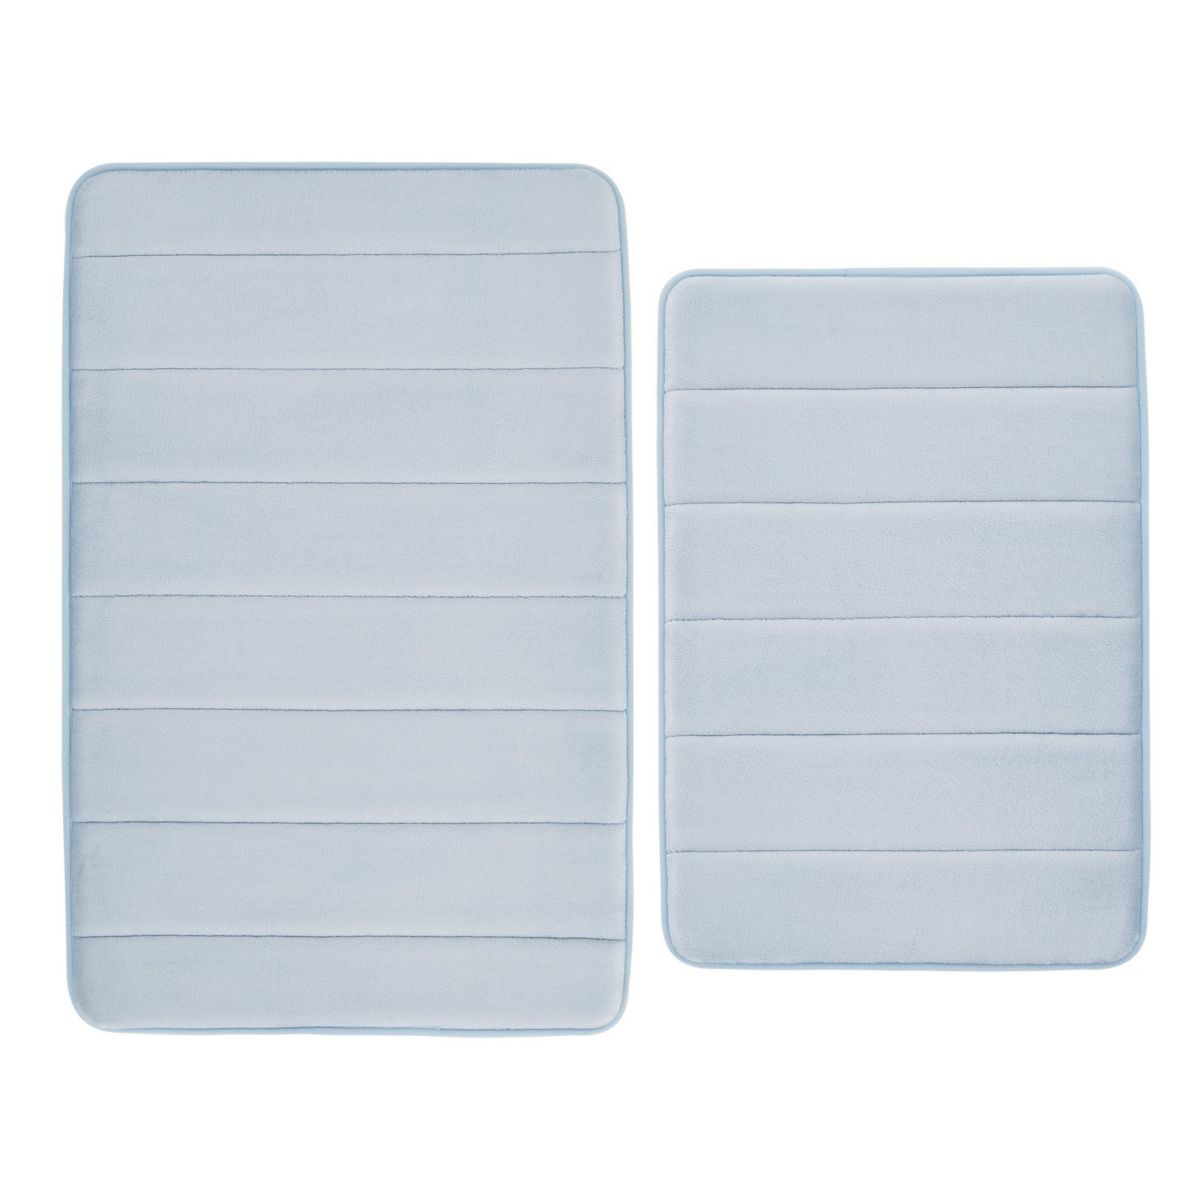 Truly Soft Solid Memory Foam 17x24 и 20x30 Комплект из 2-х ковриков для ванной Truly Soft